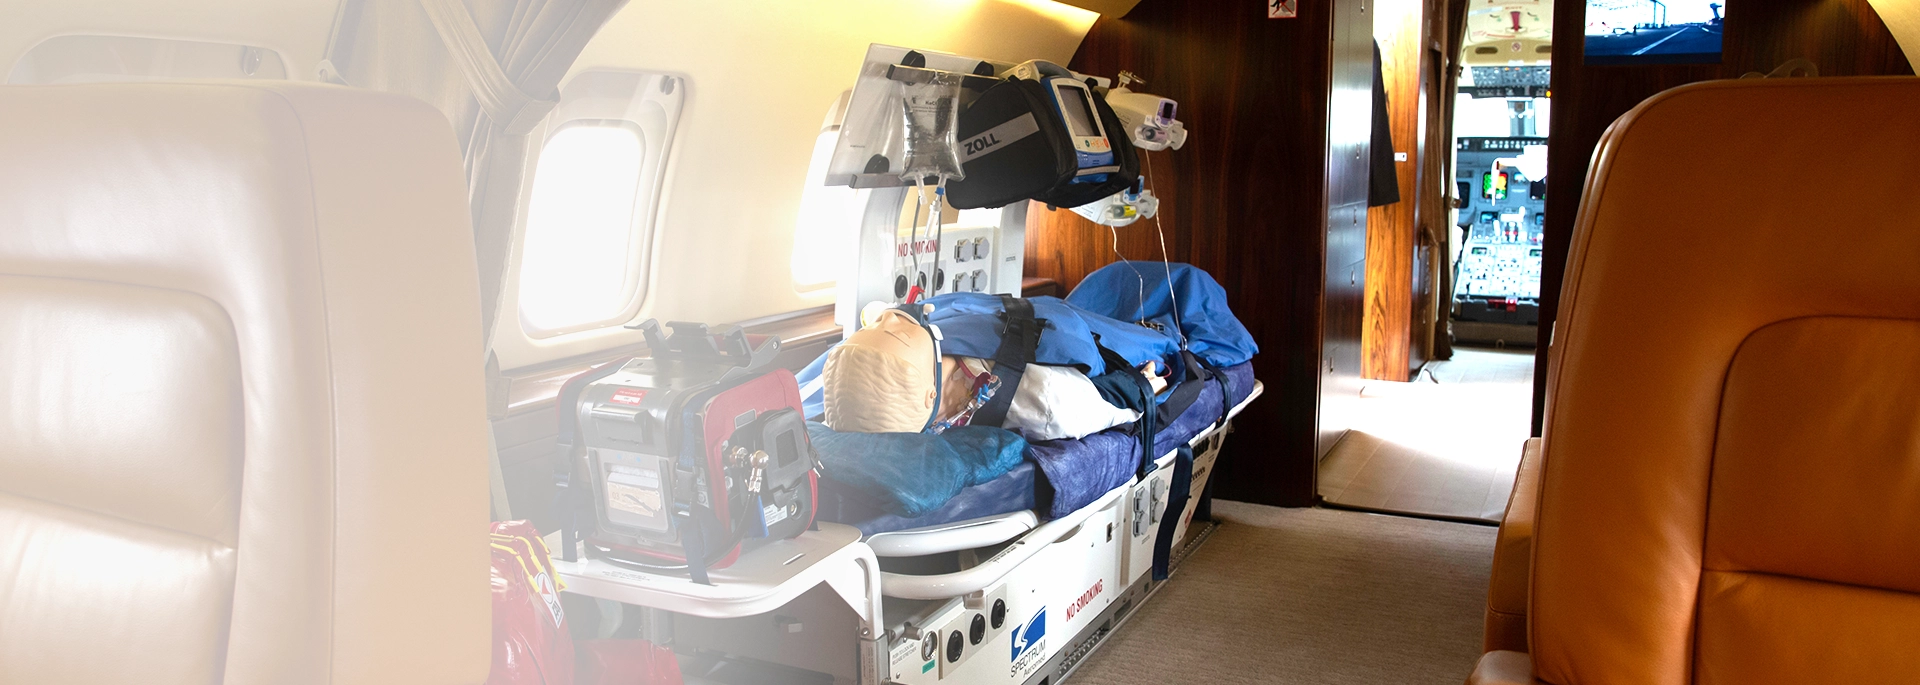 air ambulance medical equipment